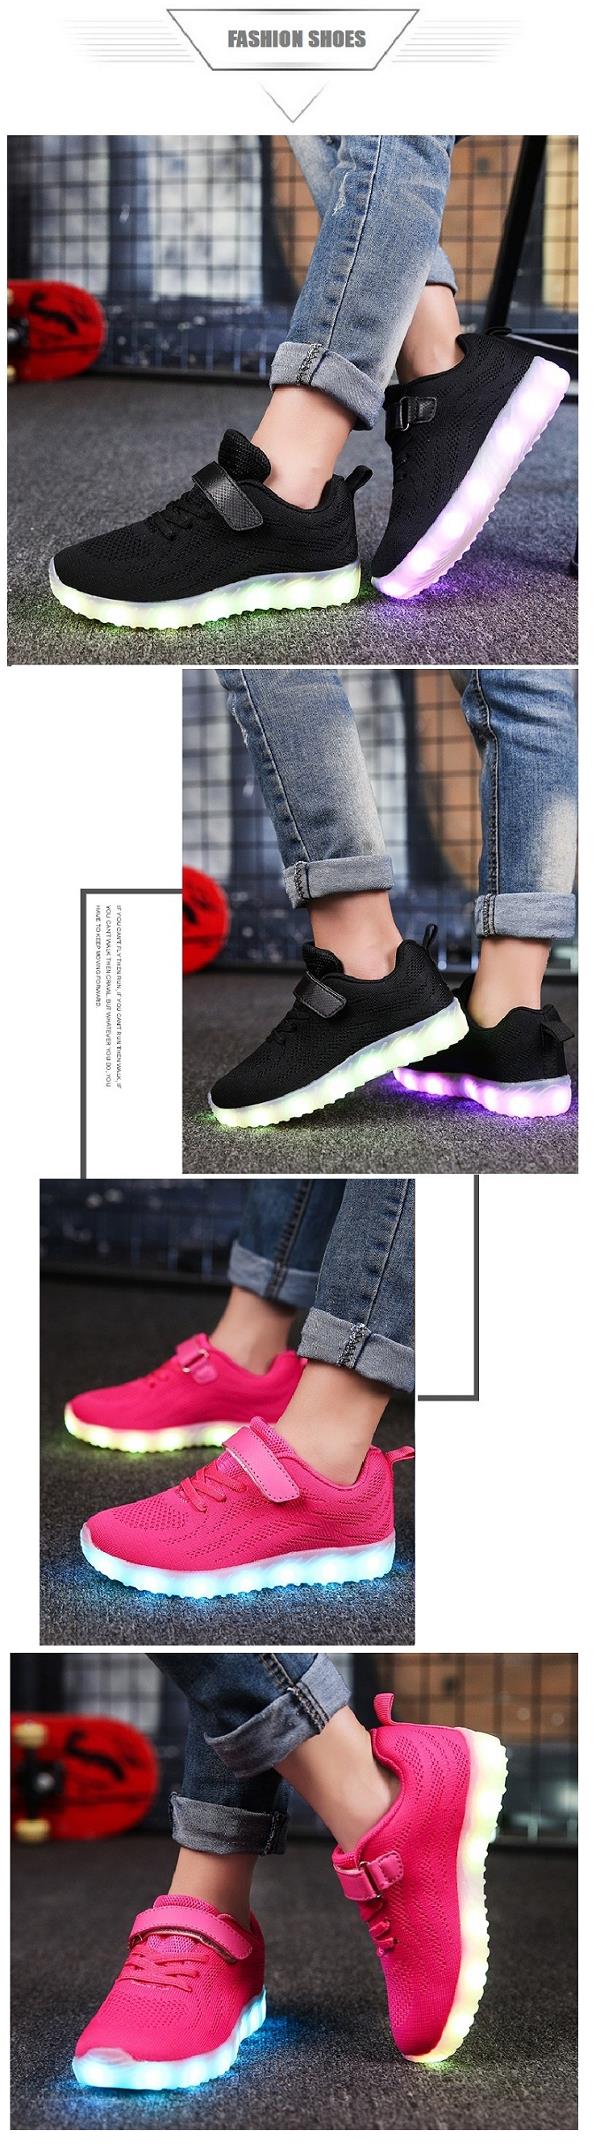 Kids-Light-Up-LED-Sport-Shoes-Girls-Boys-Mesh-sneakers-Flash-Shoes-1205498